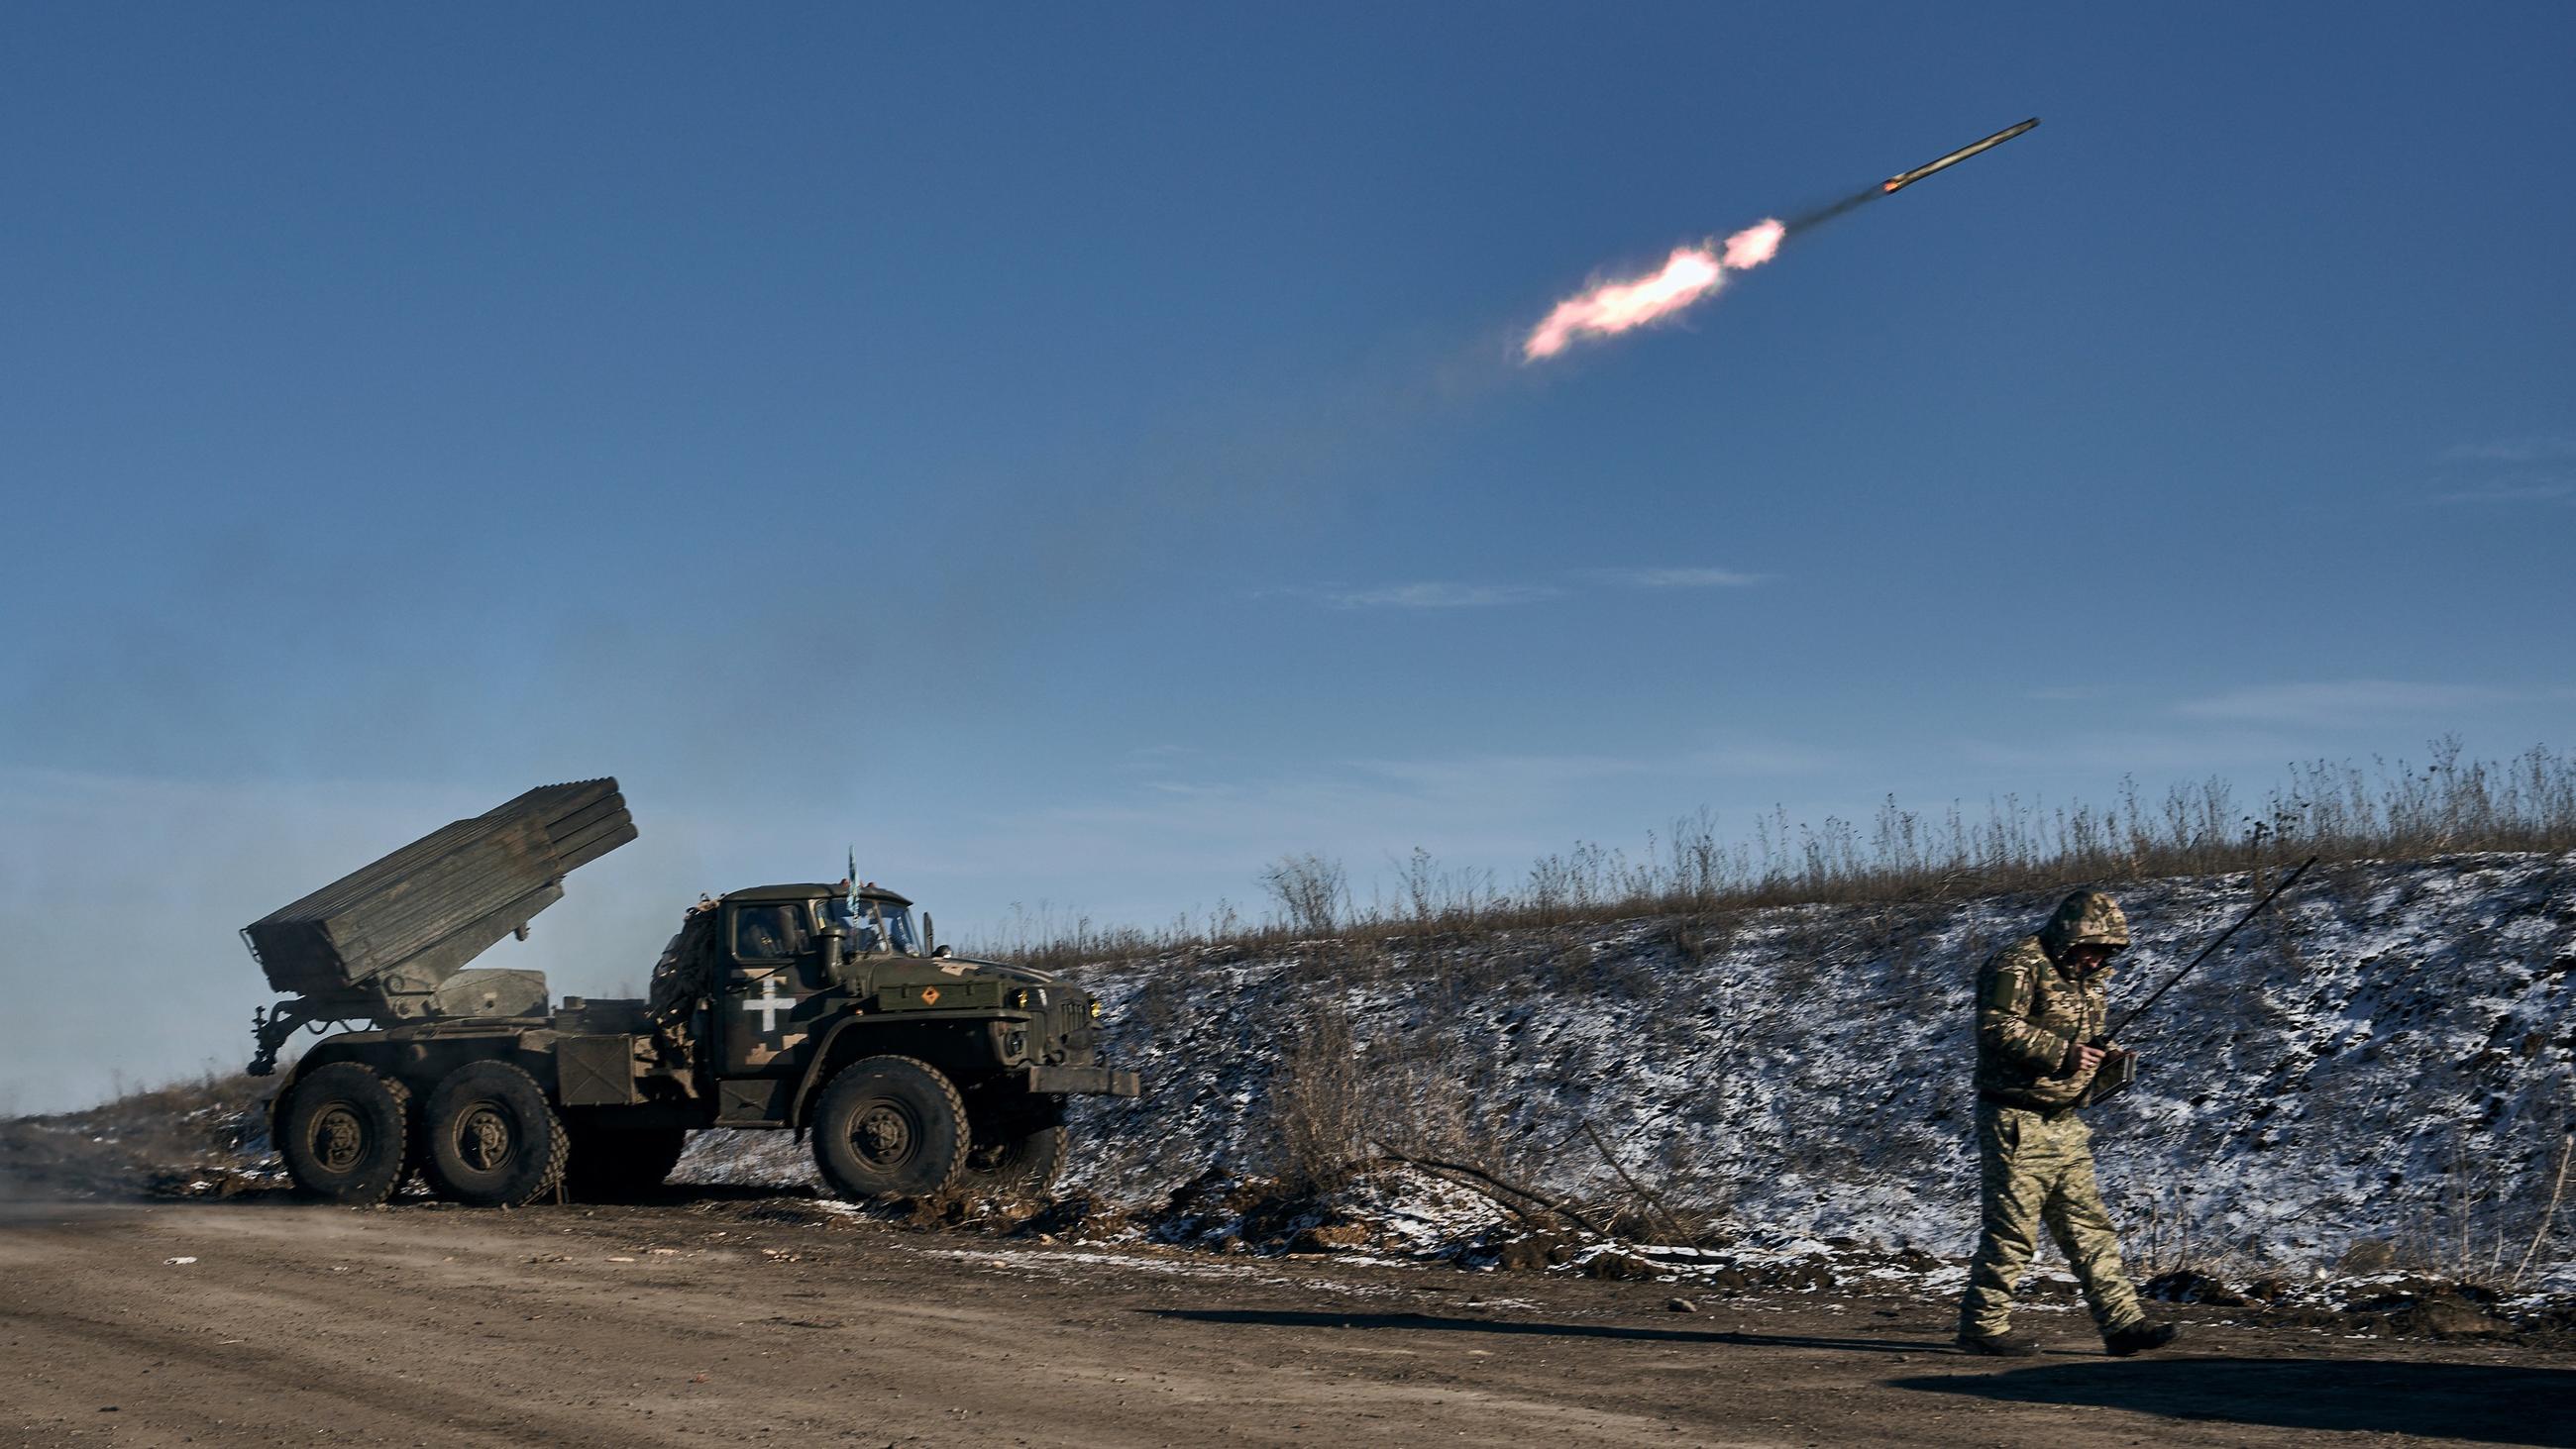 Ukrainian army Grad multiple rocket launcher fires rockets at Russian positions in the frontline near Soledar, Donetsk region, Ukraine, Wednesday 11 January 2023 (AP)